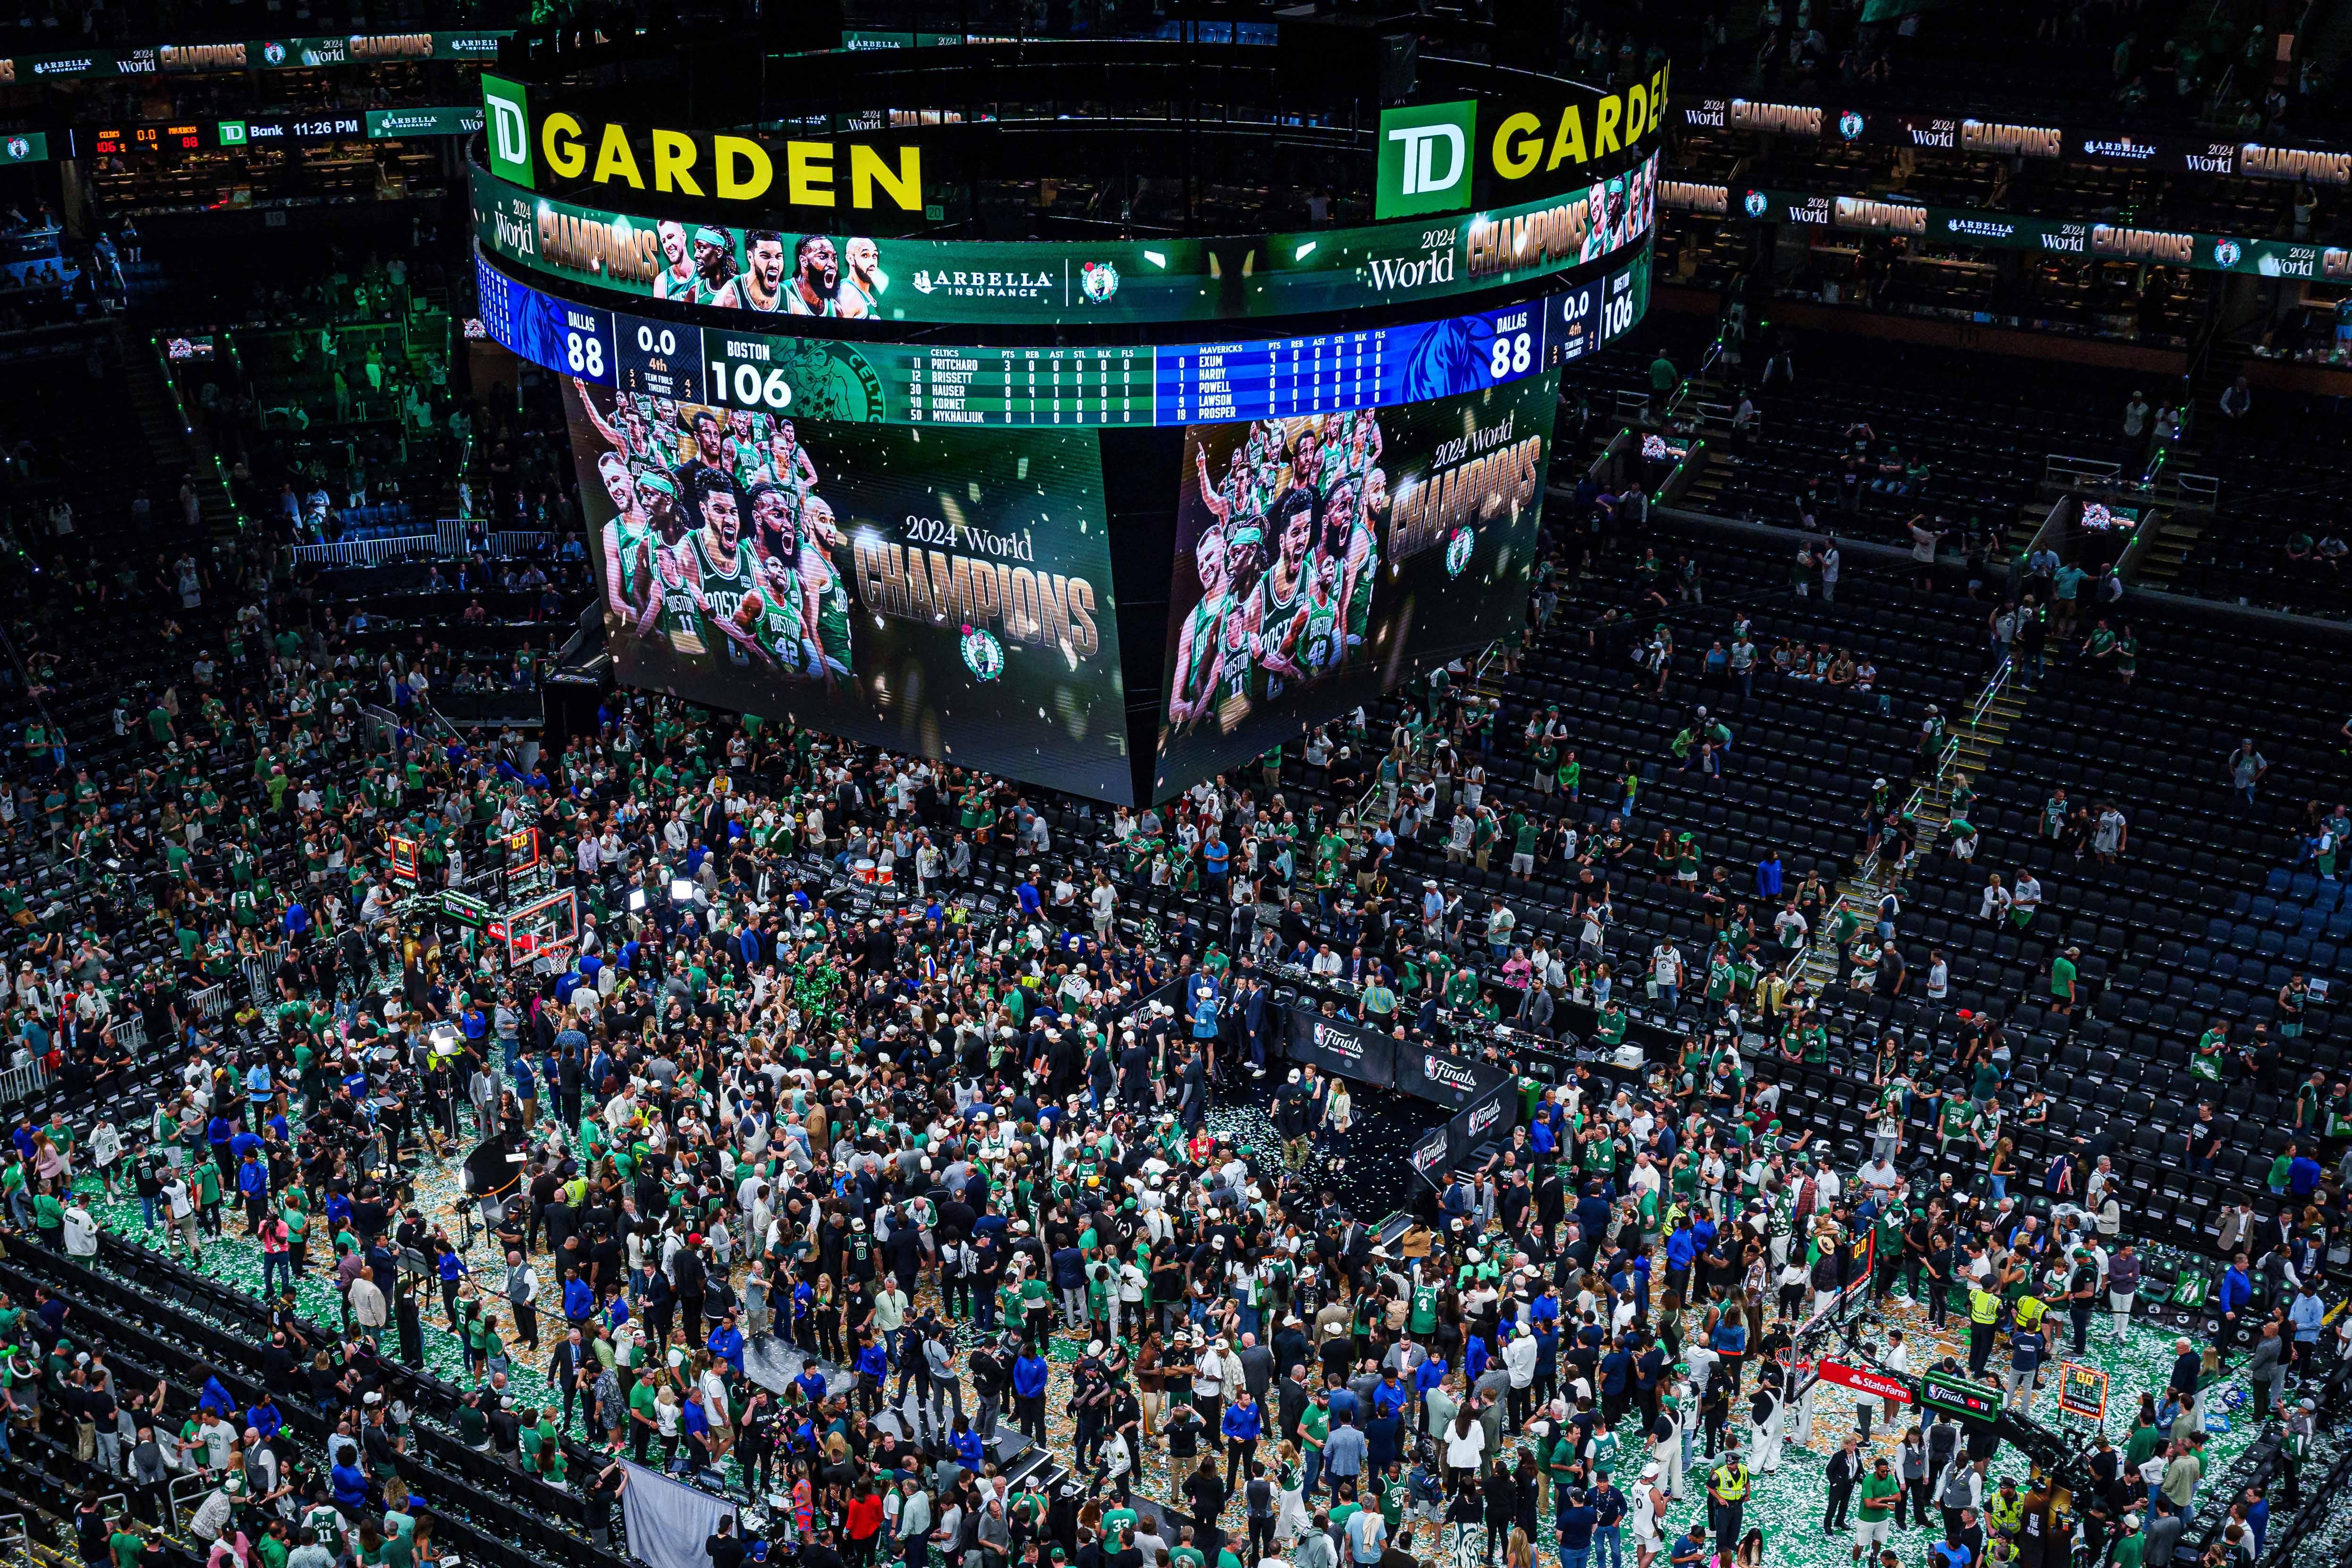 NBA: Celtics celebrate, confident championship window is wide open